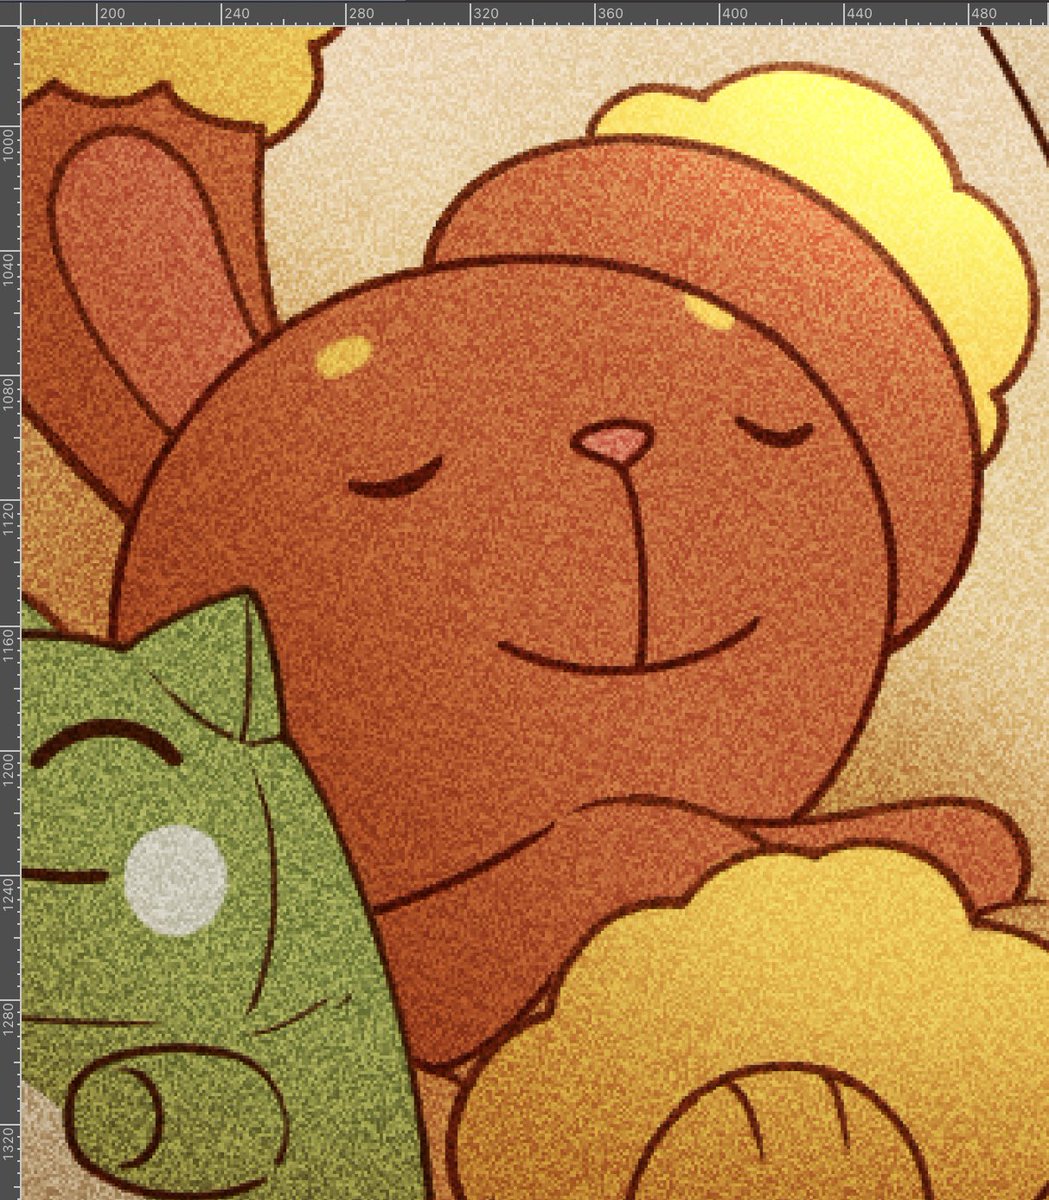 closed eyes pokemon (creature) closed mouth smile happy lying sleeping  illustration images